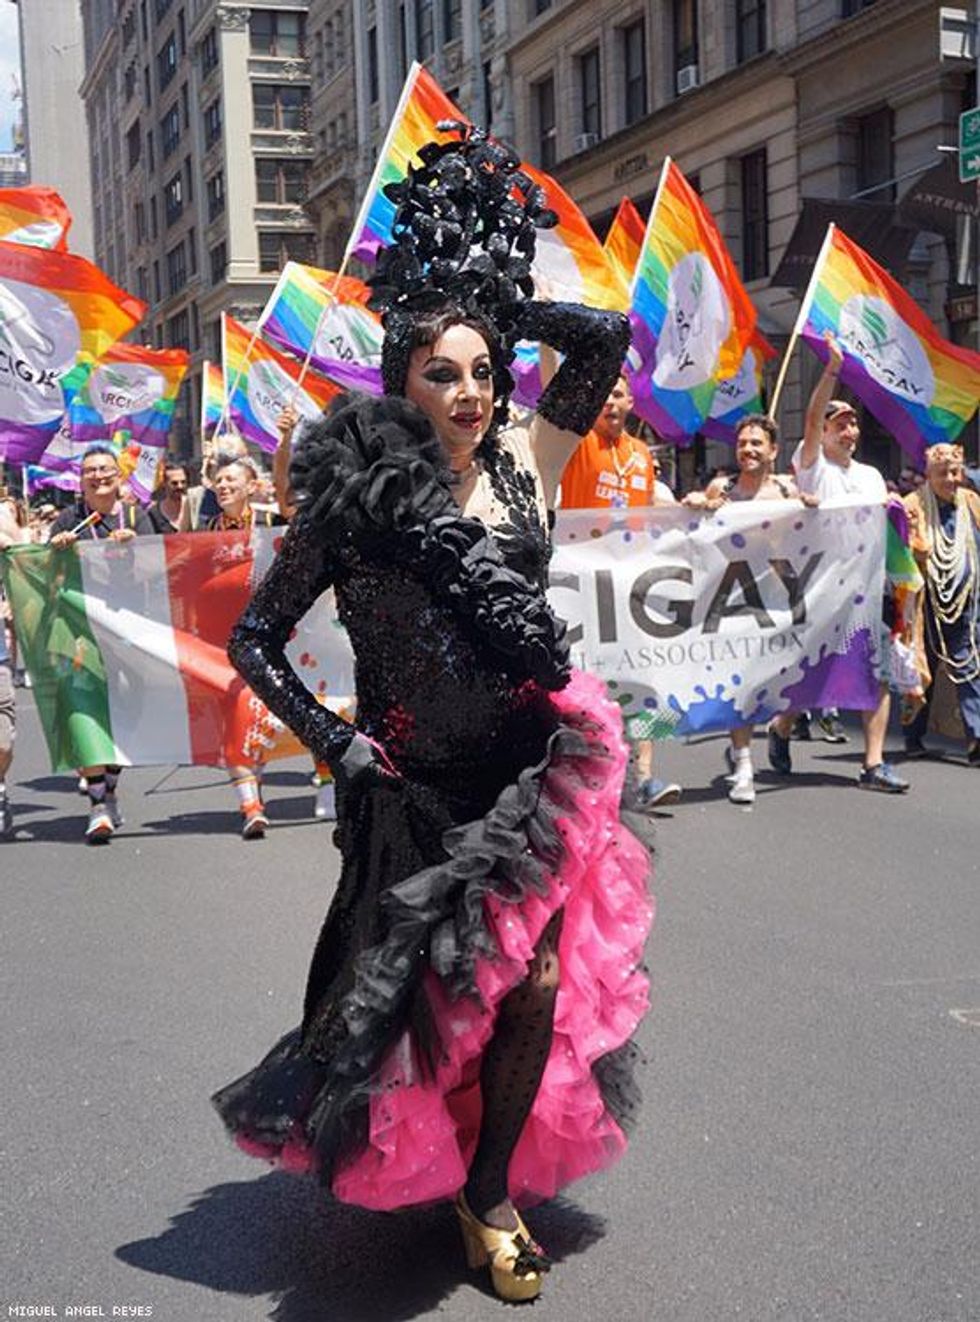 068-nyc-pride-parade-miguel-angel-reyes-2019